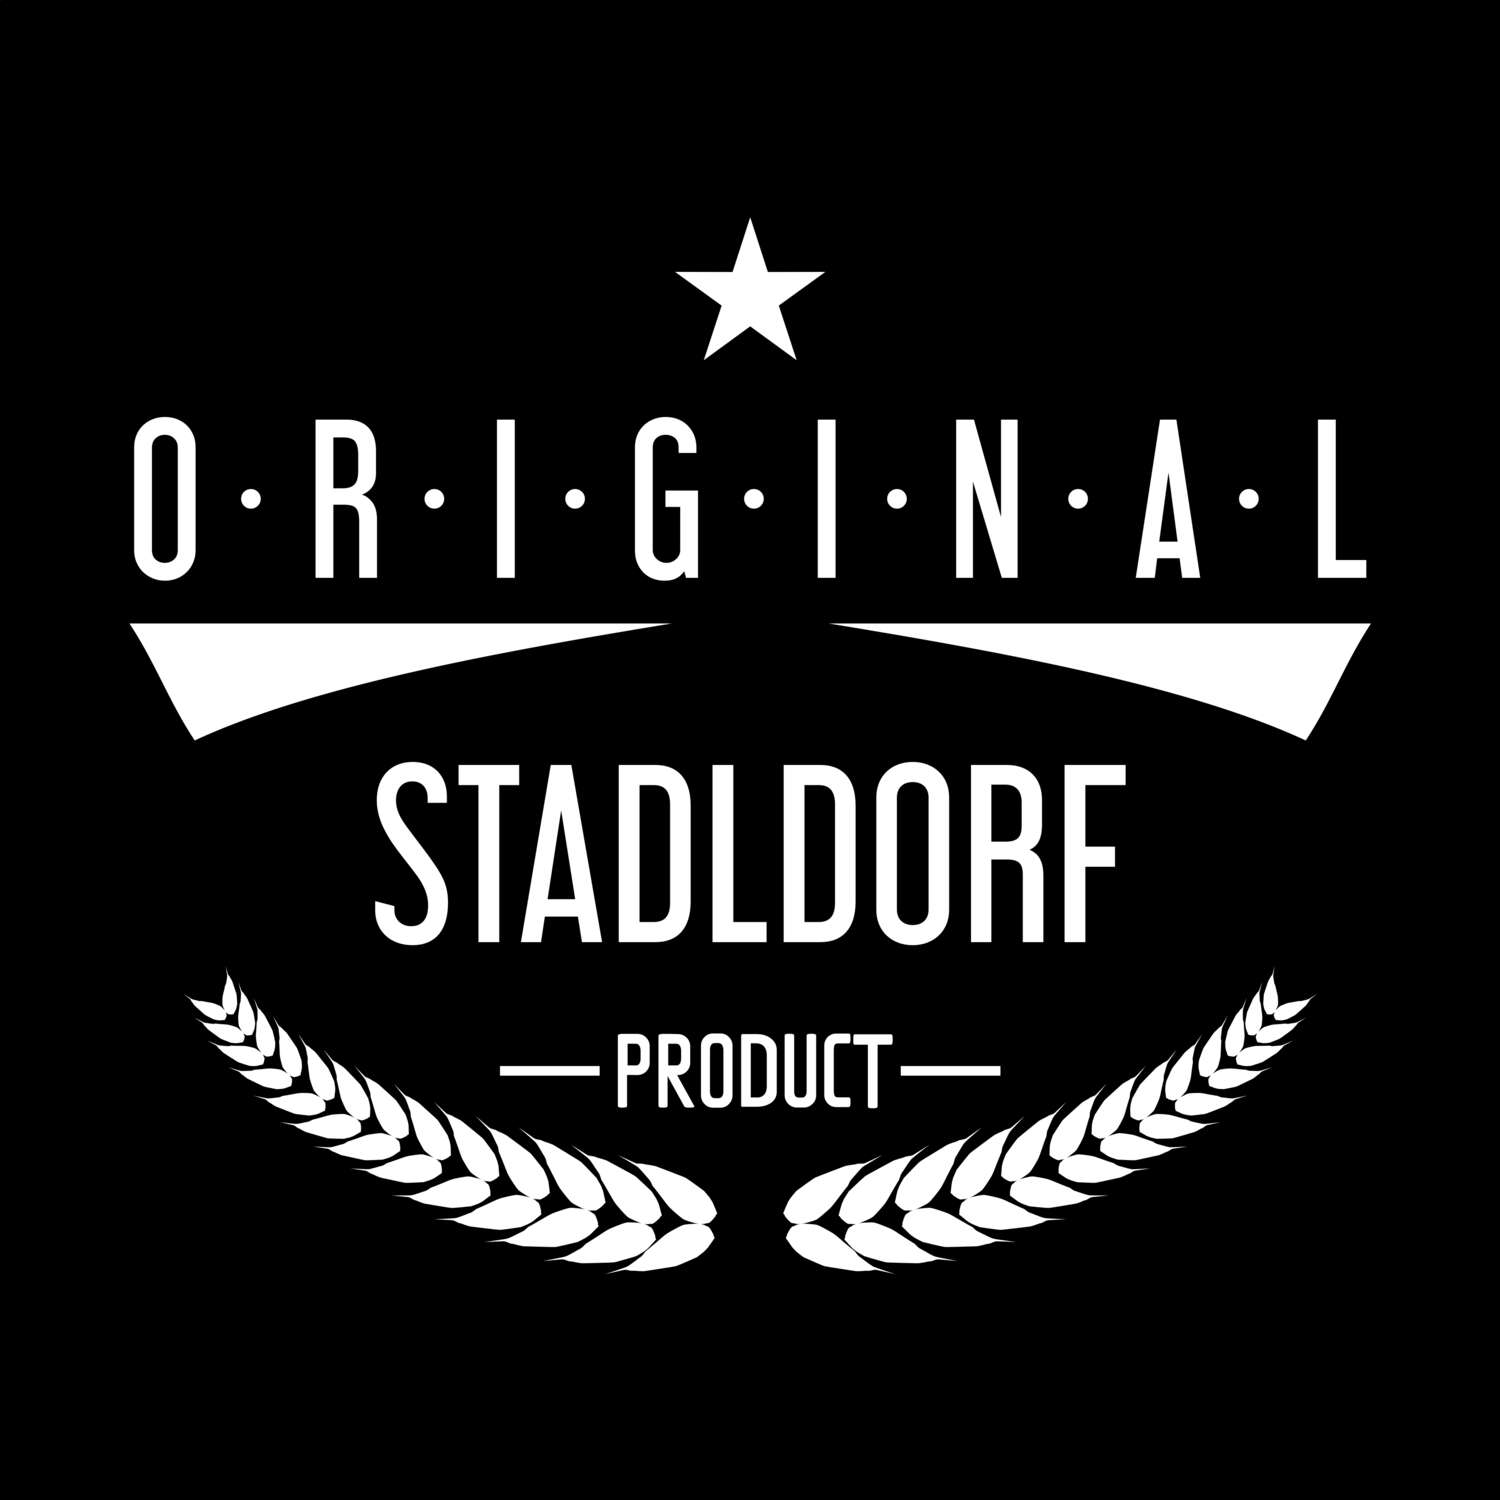 Stadldorf T-Shirt »Original Product«